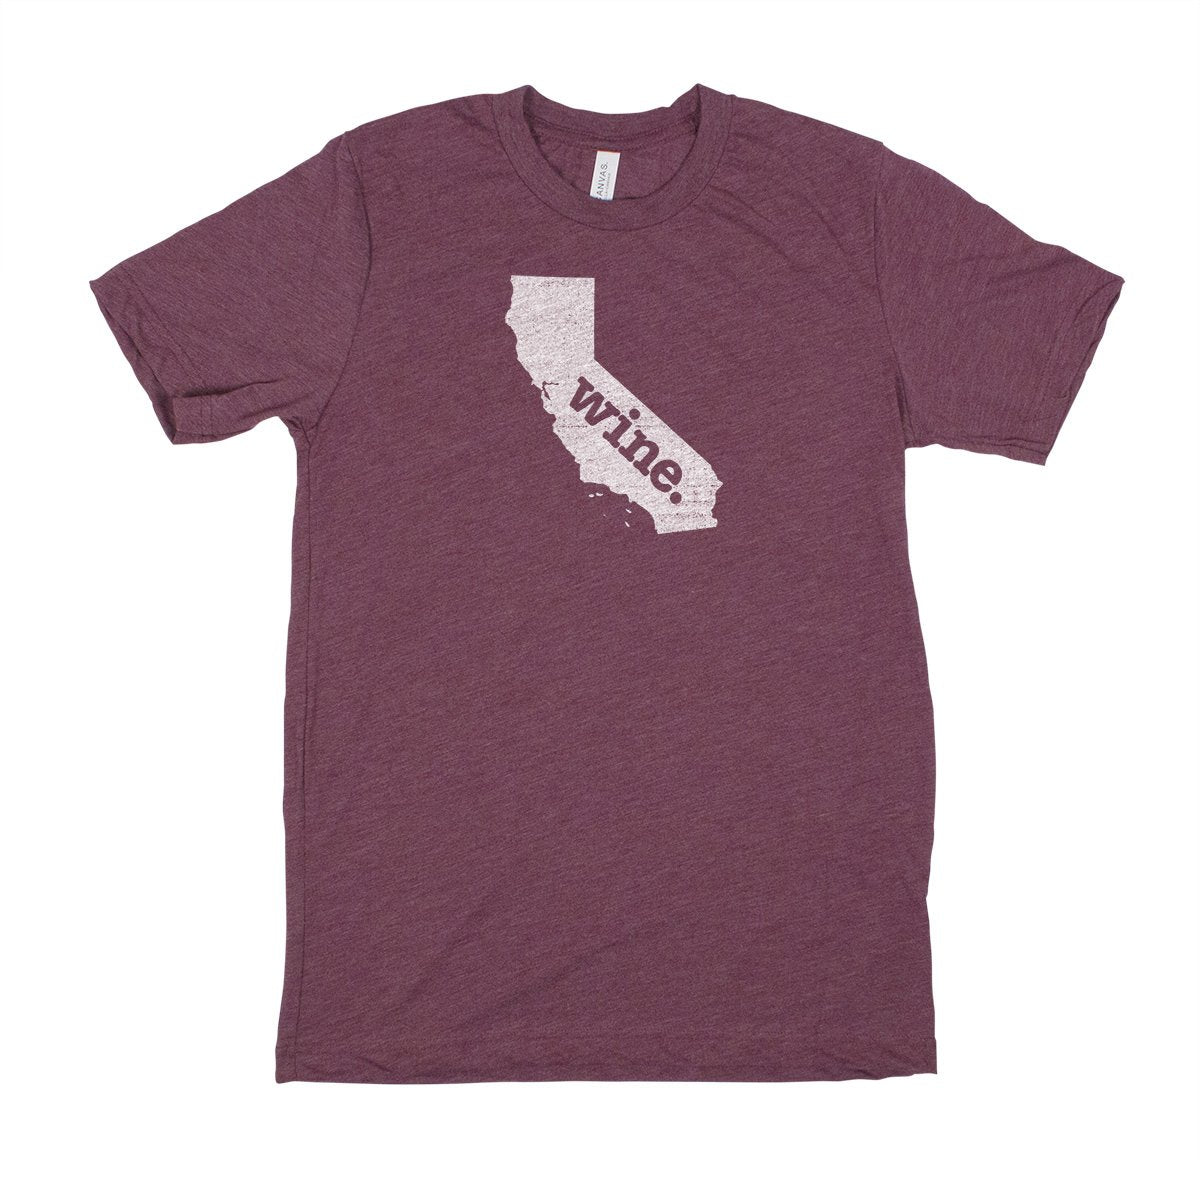 run. Men's Unisex T-Shirt - Missouri